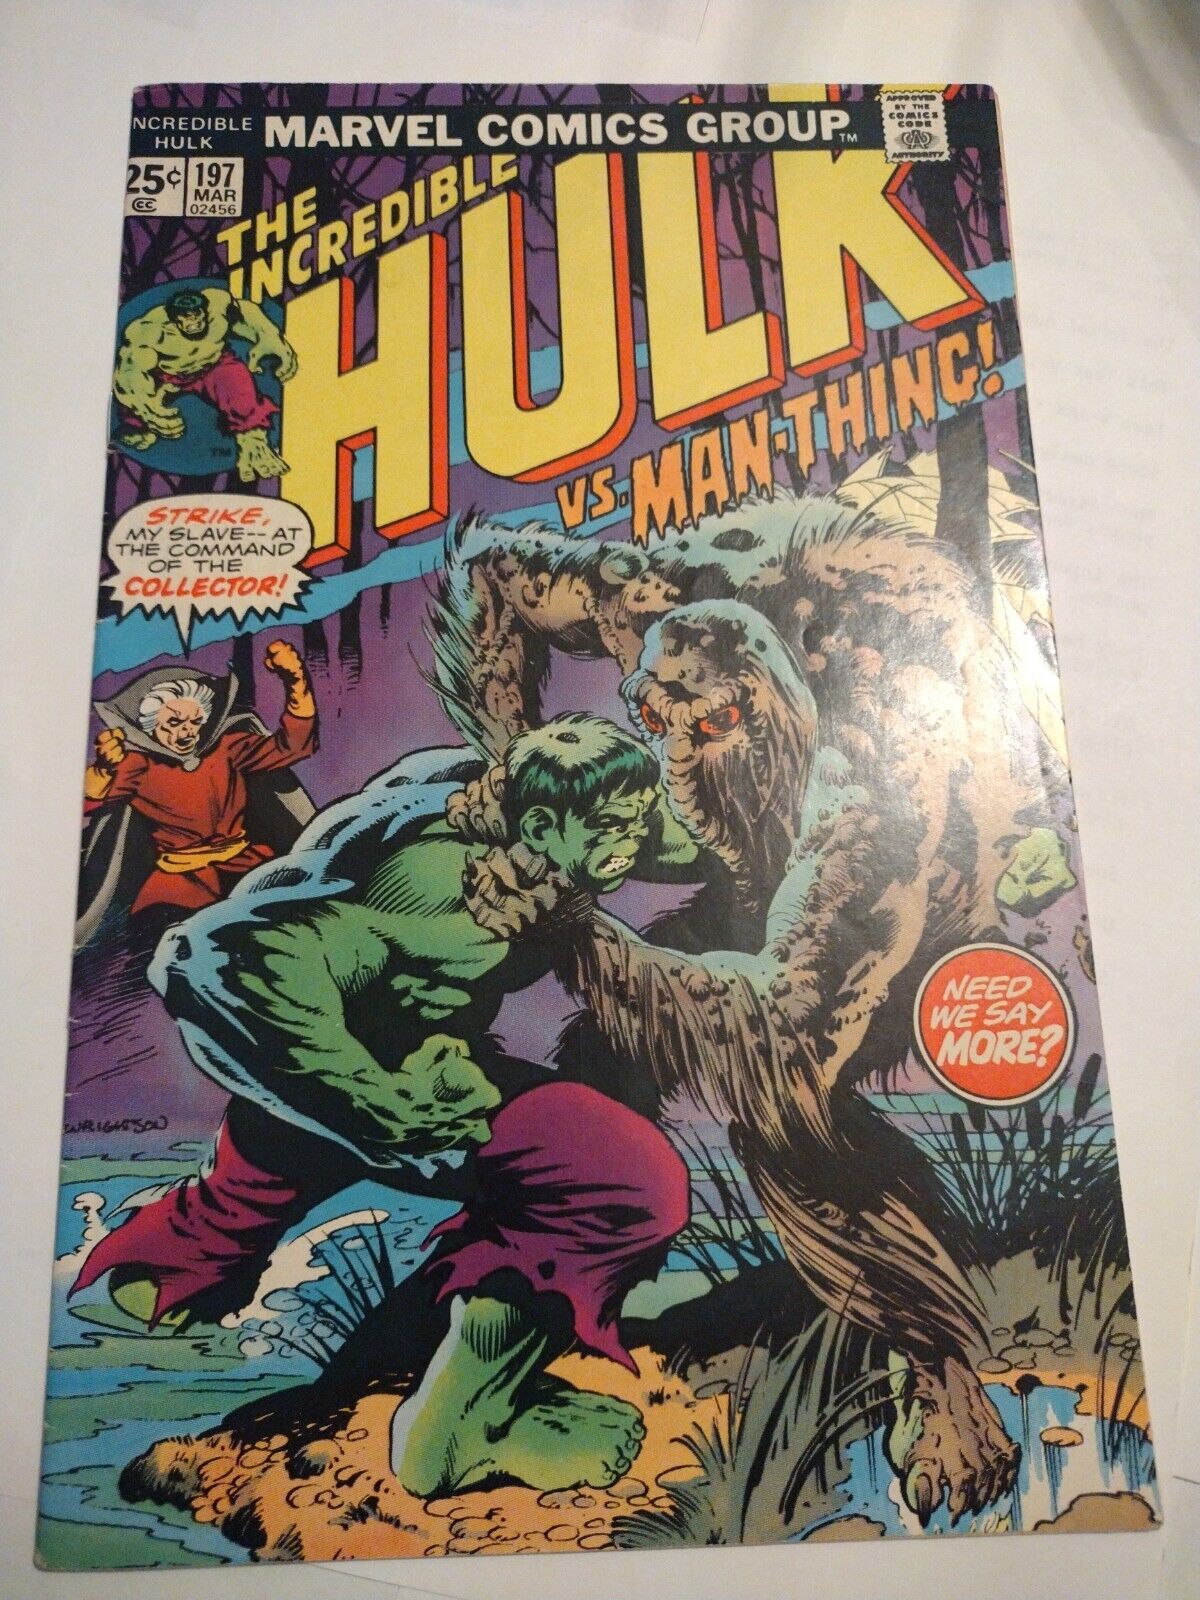 Incredible Hulk #197 - Collector, Man-Thing, MVS Intact - Marvel Comics 1976